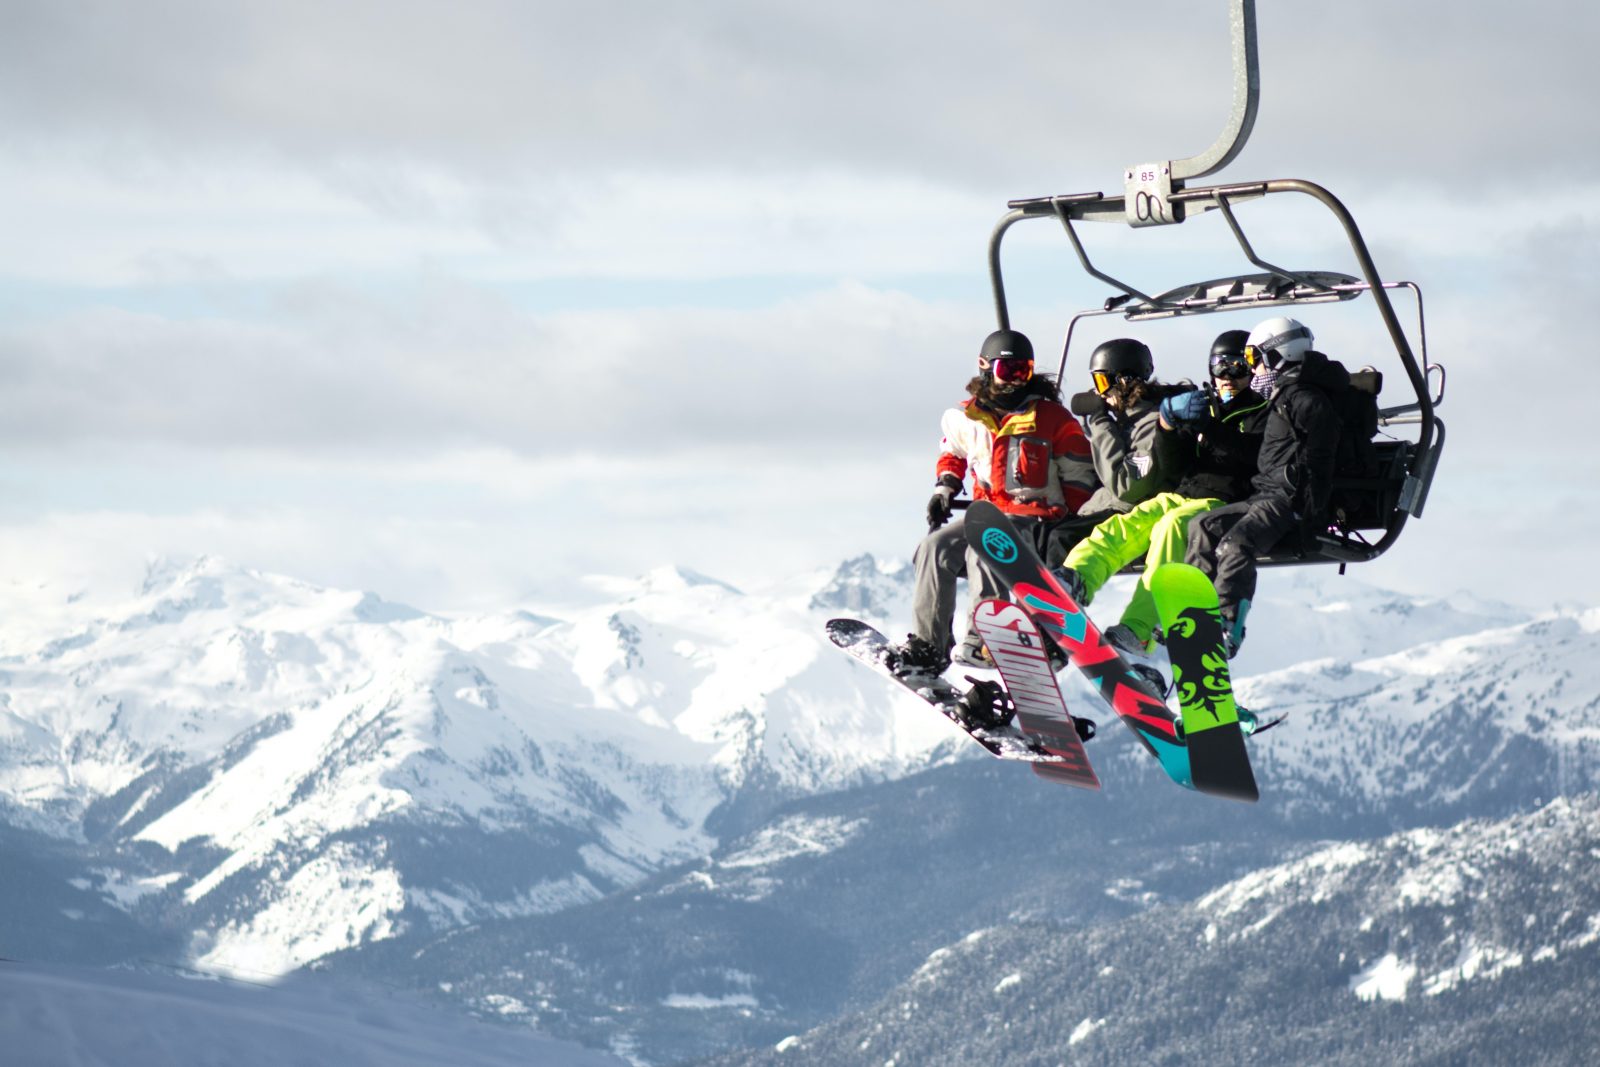 Le ski alpin sera permis cet hiver - L'Express